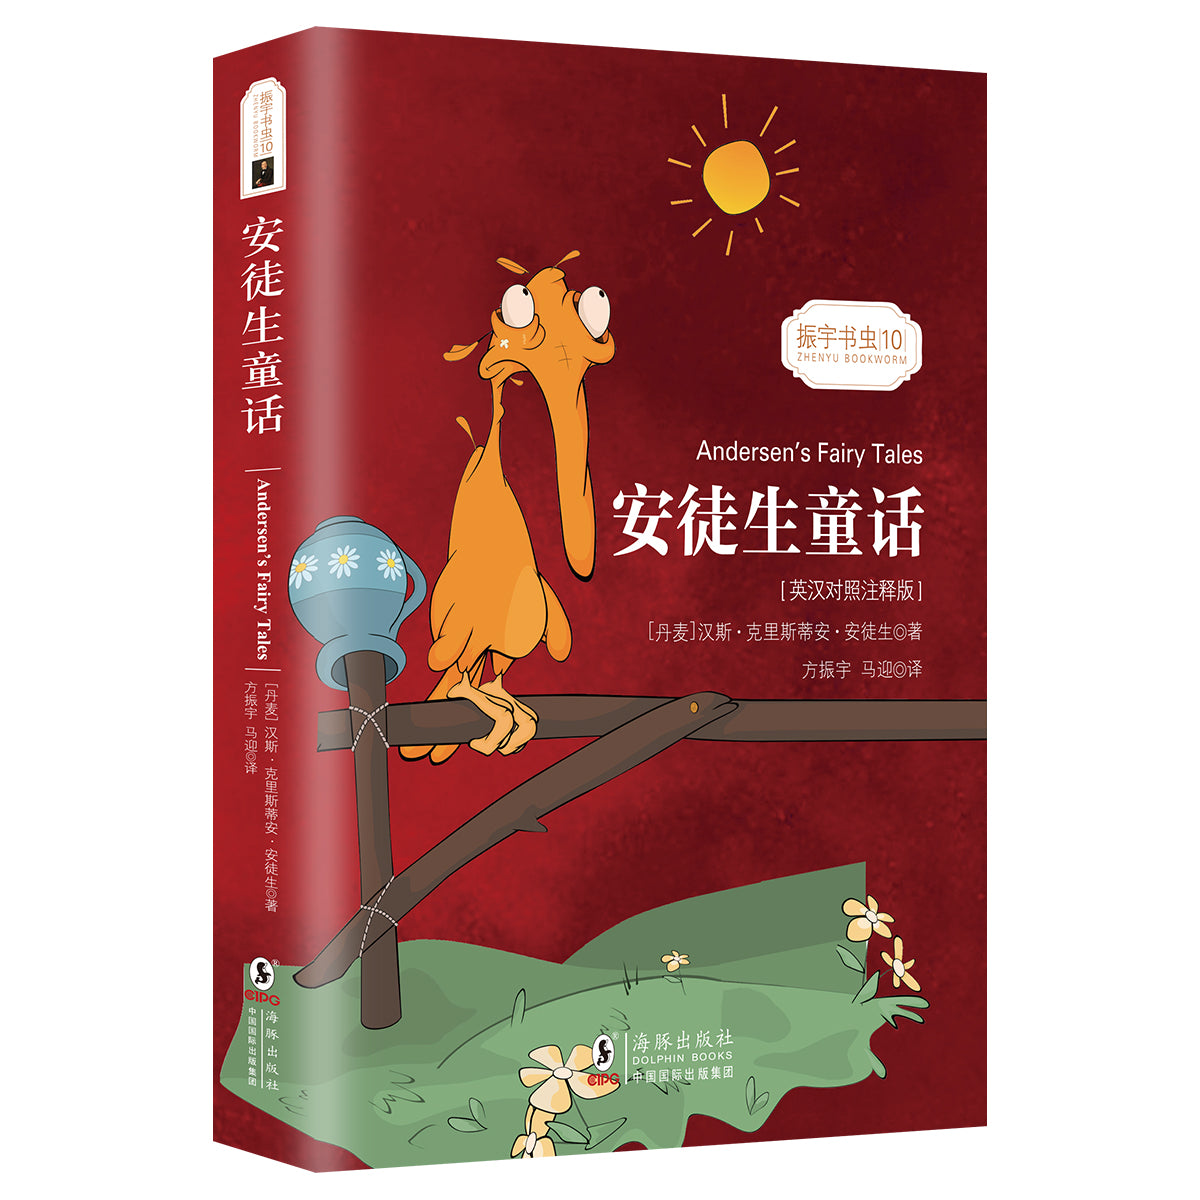 Bilingual classic Andersen's Fairy Tales